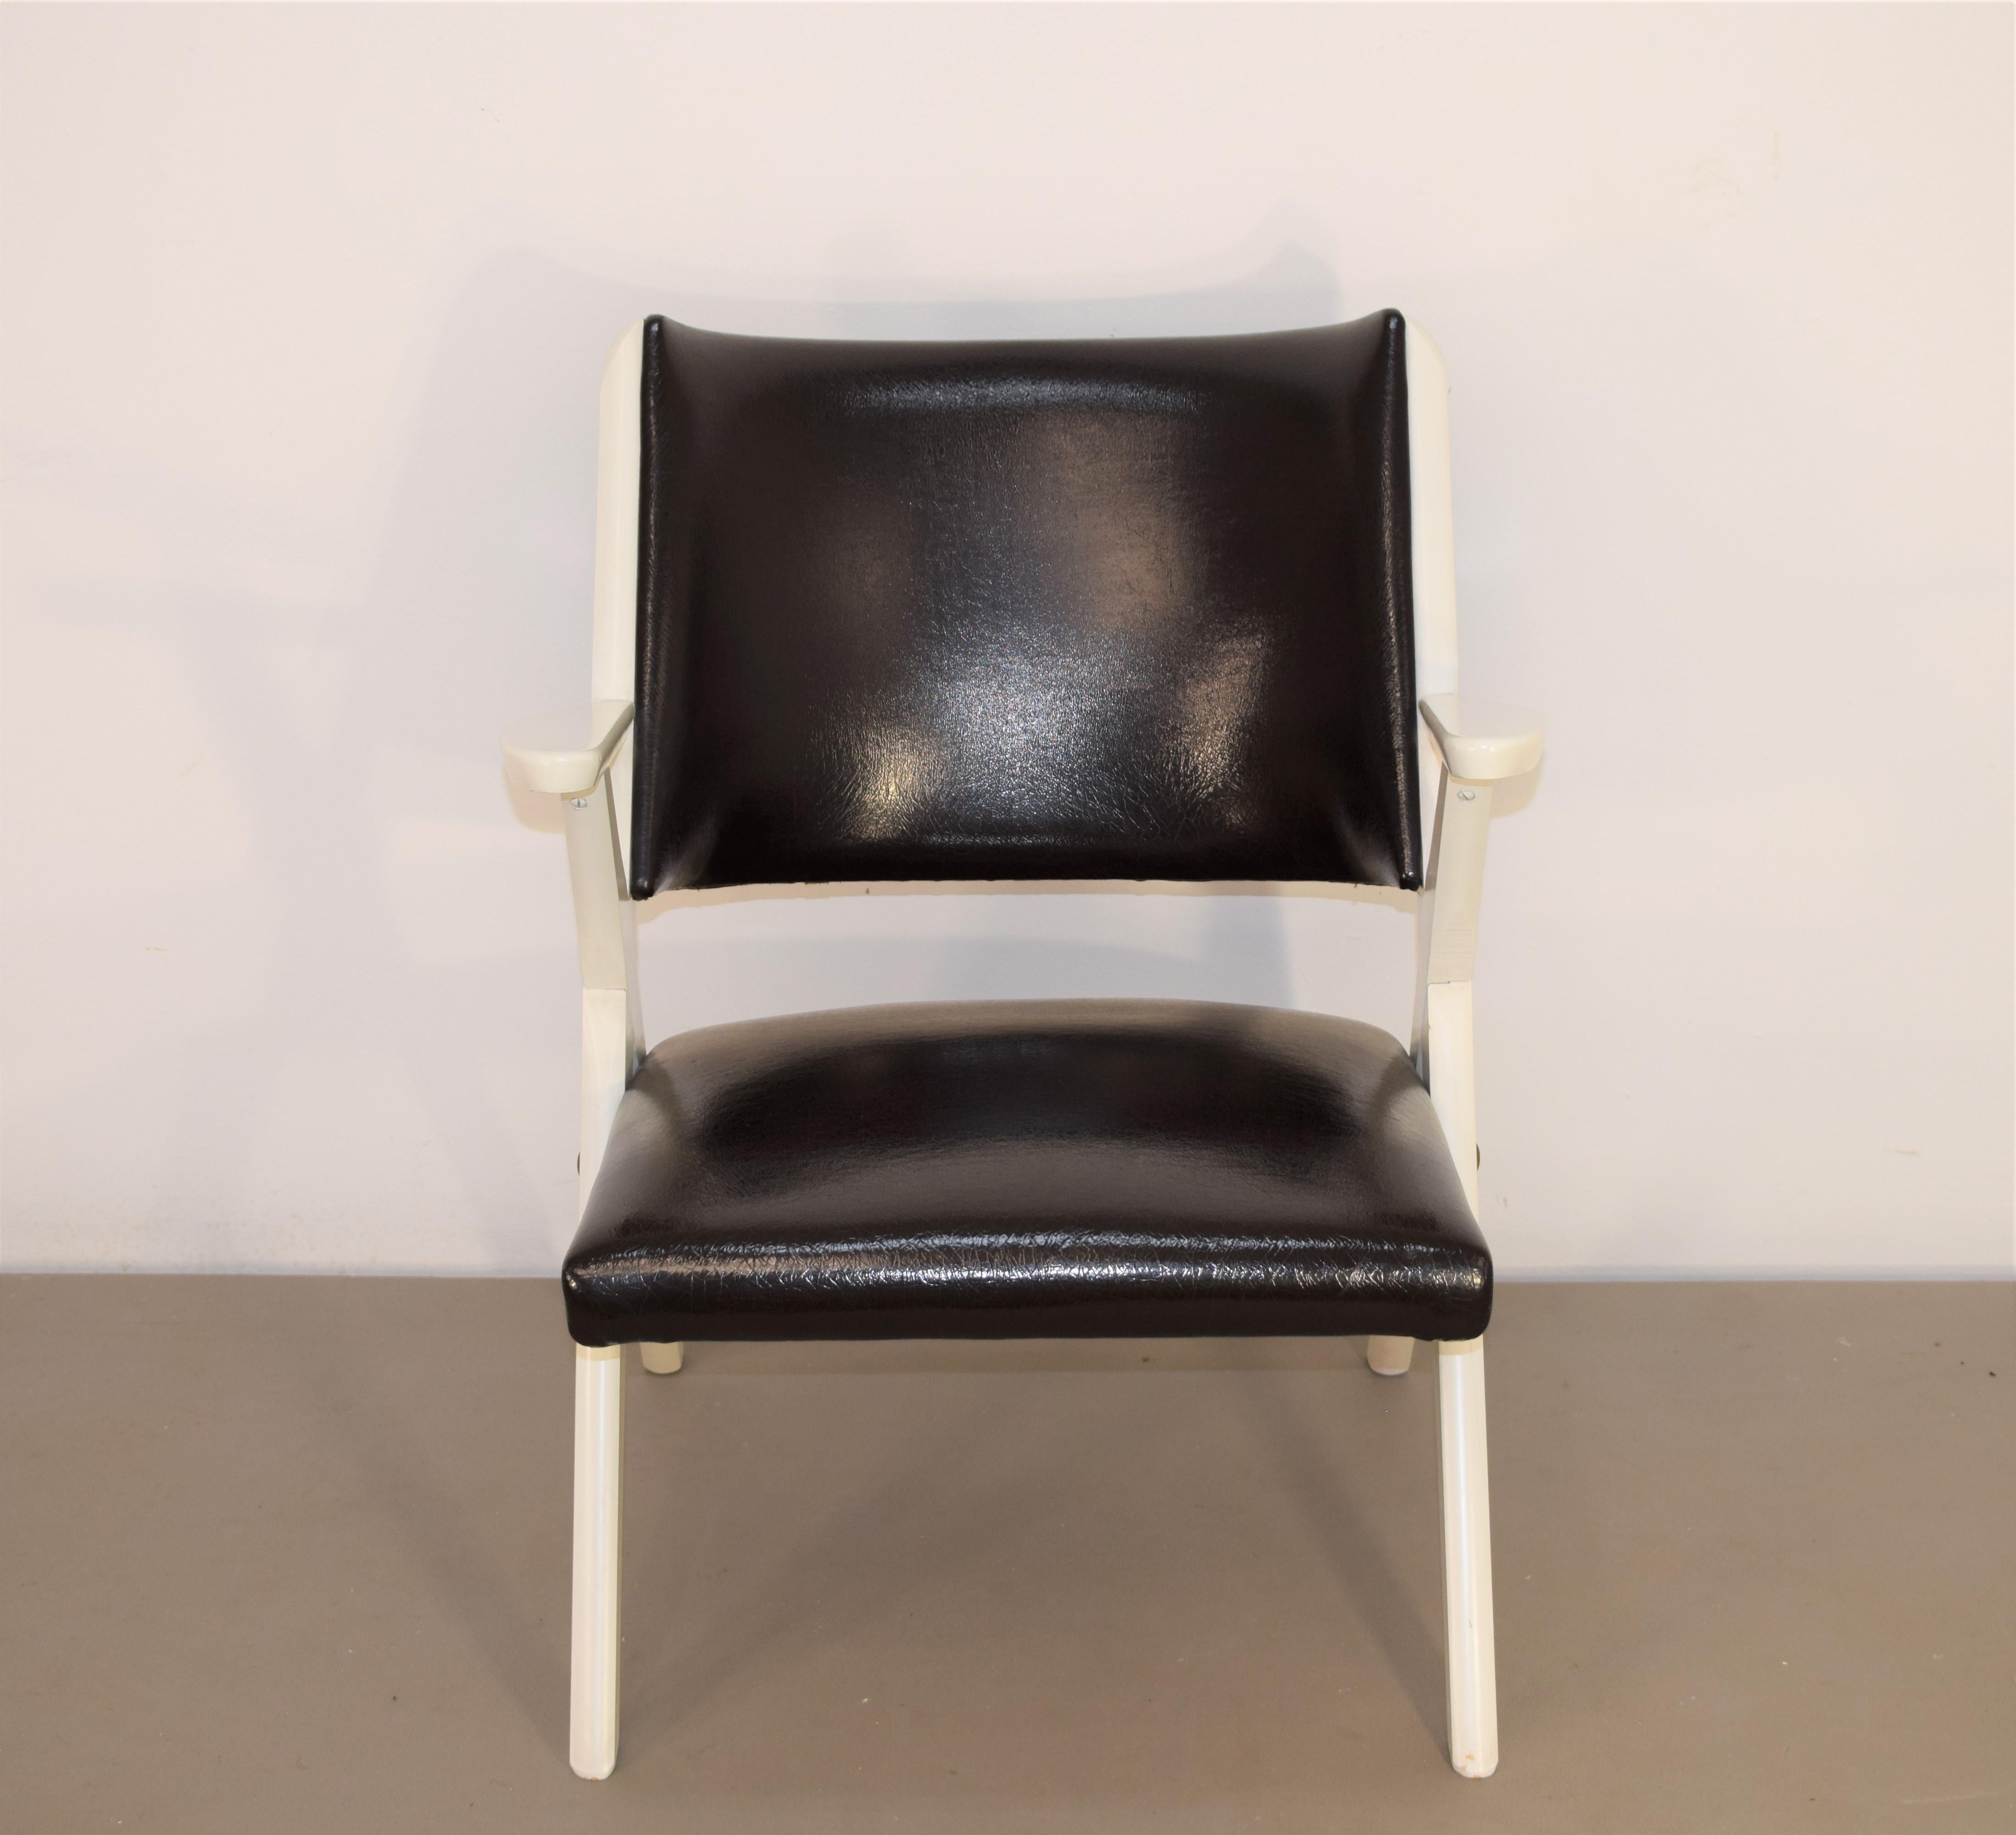 Set of 2 Italian armchairs by Dal Vera, 1950s
Dimensions: H= 74 cm; H seat= 38 cm; W= 58 cm; D= 64 cm.